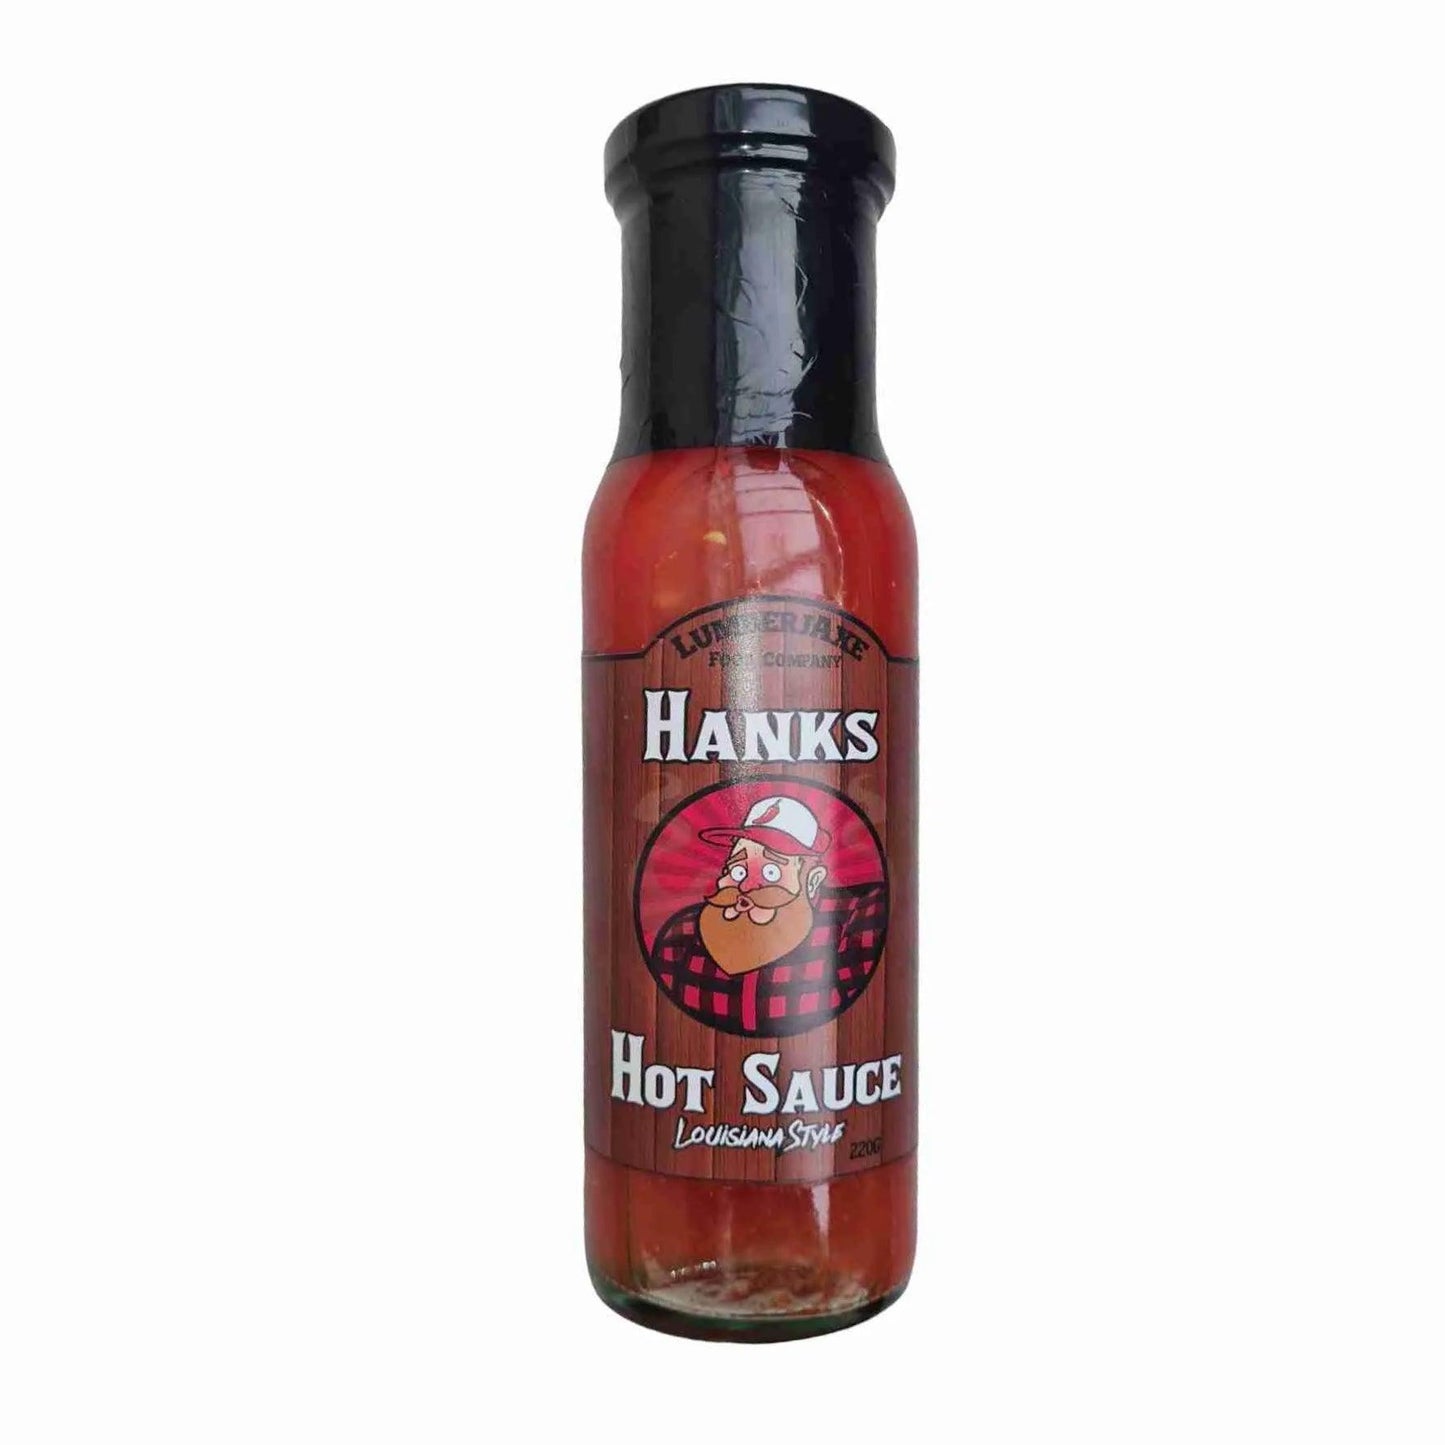 Hanks Hot Sauce 220g by LumberjAxe - BBQ Land